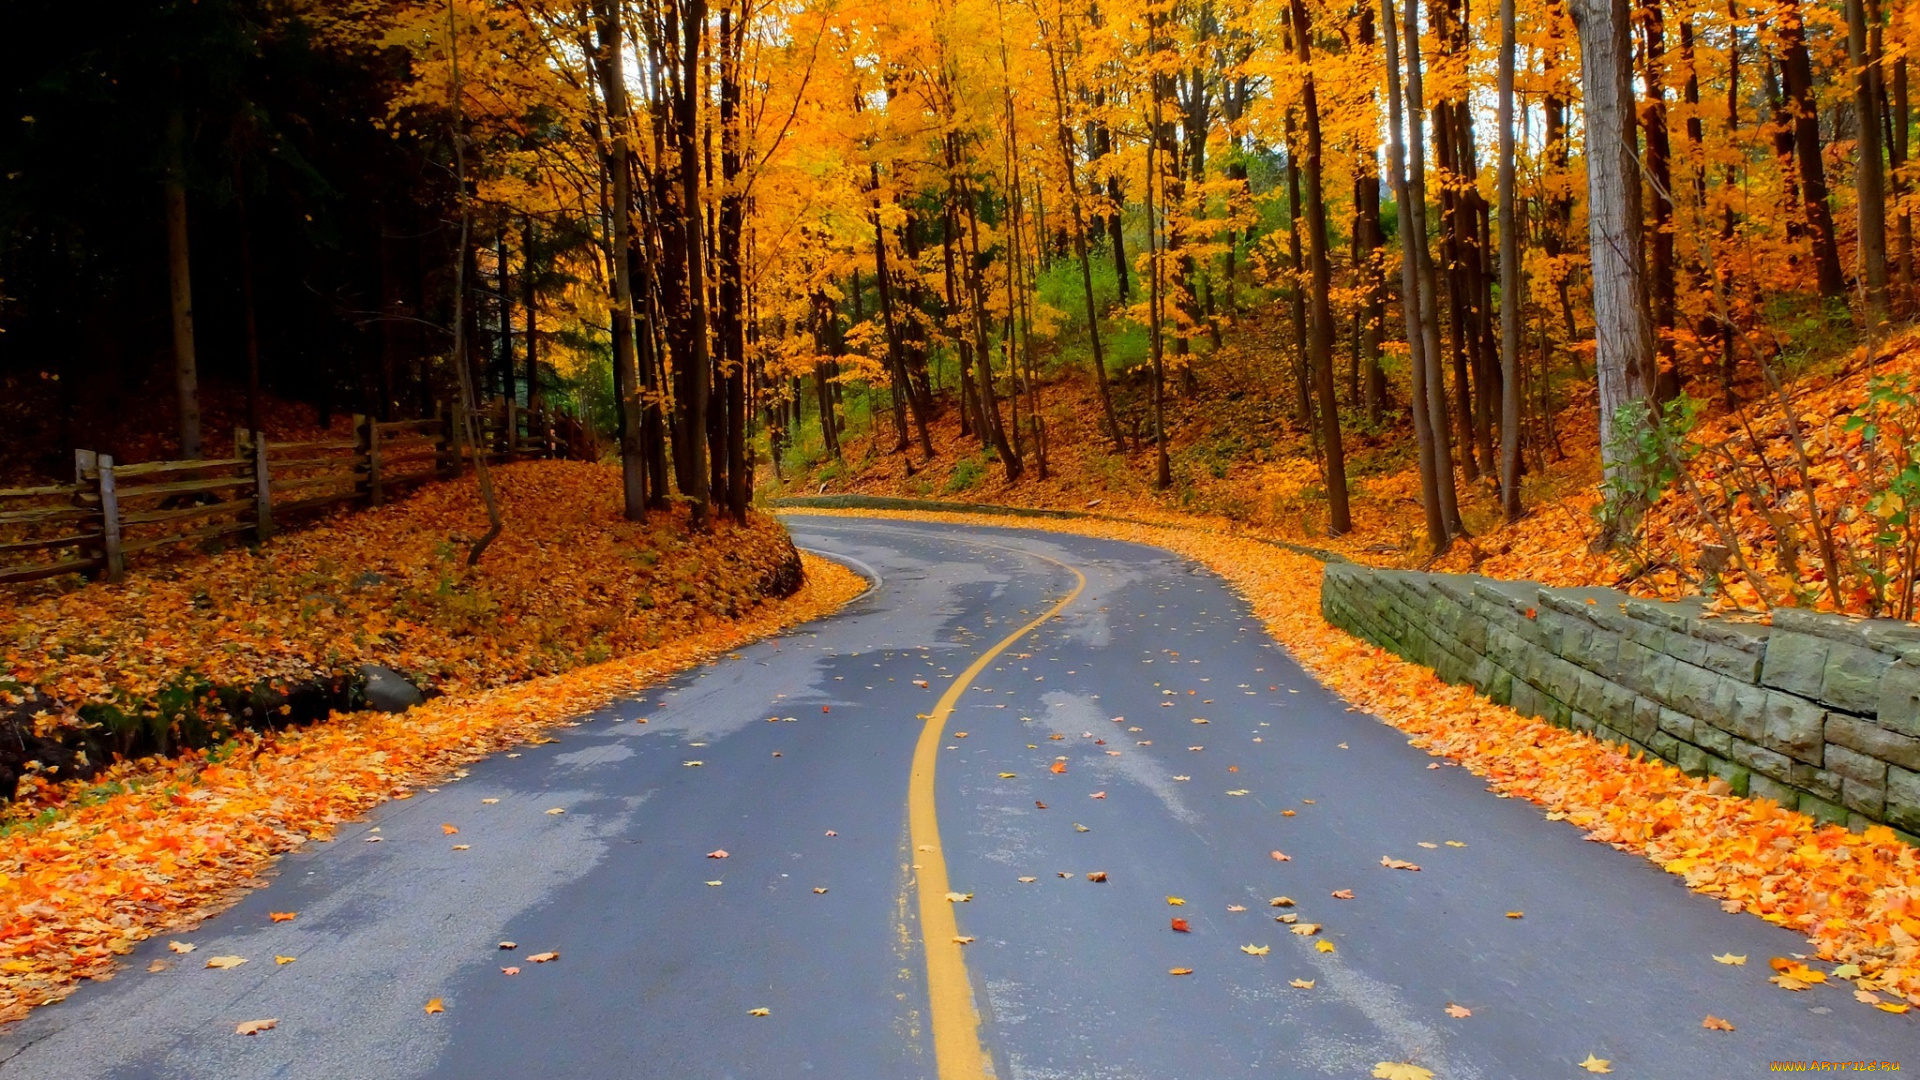 природа, дороги, лес, осень, листья, walk, colors, деревья, colorful, leaves, trees, park, forest, nature, fall, autumn, path, road, парк